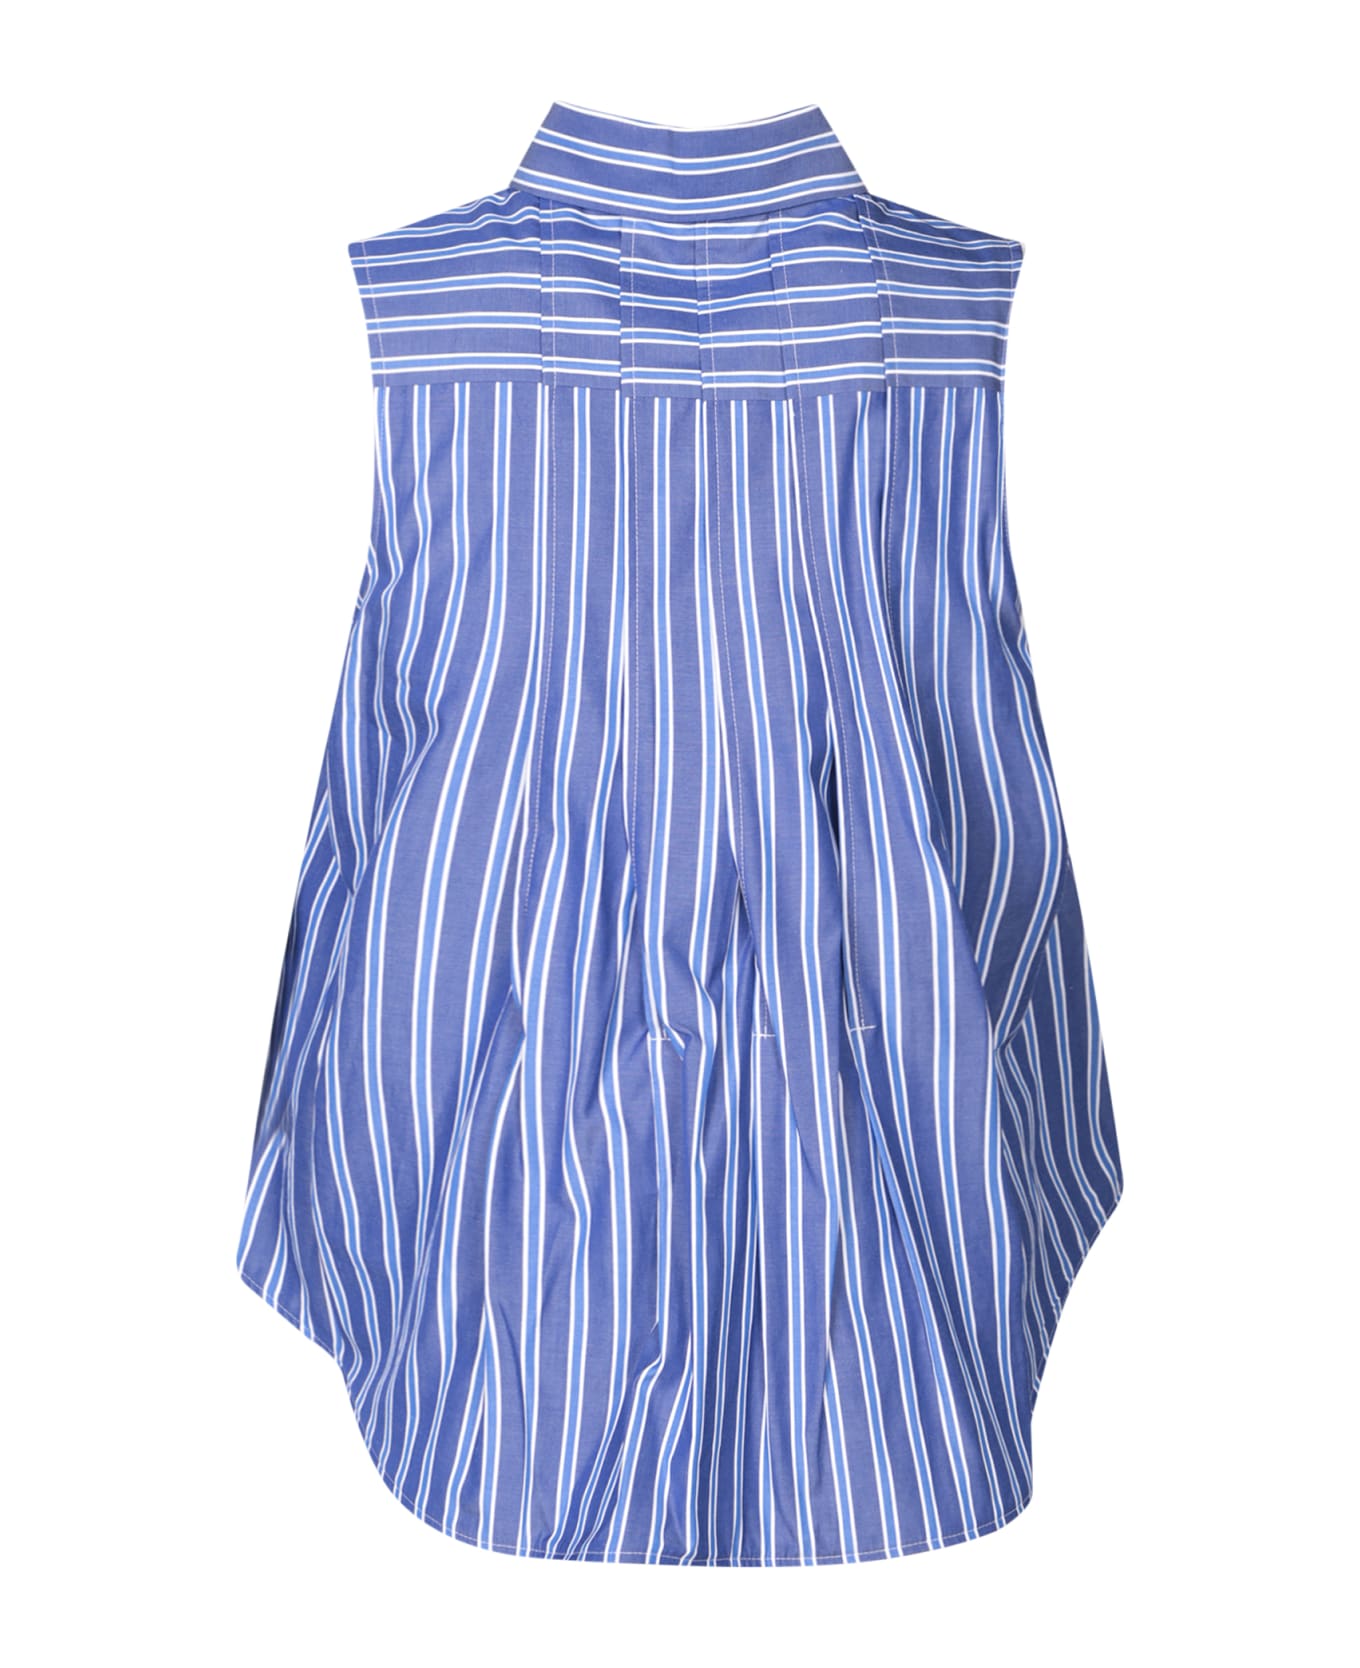 Sacai Sleeveless Shirt In White And Light Blue Stripes - Multi シャツ